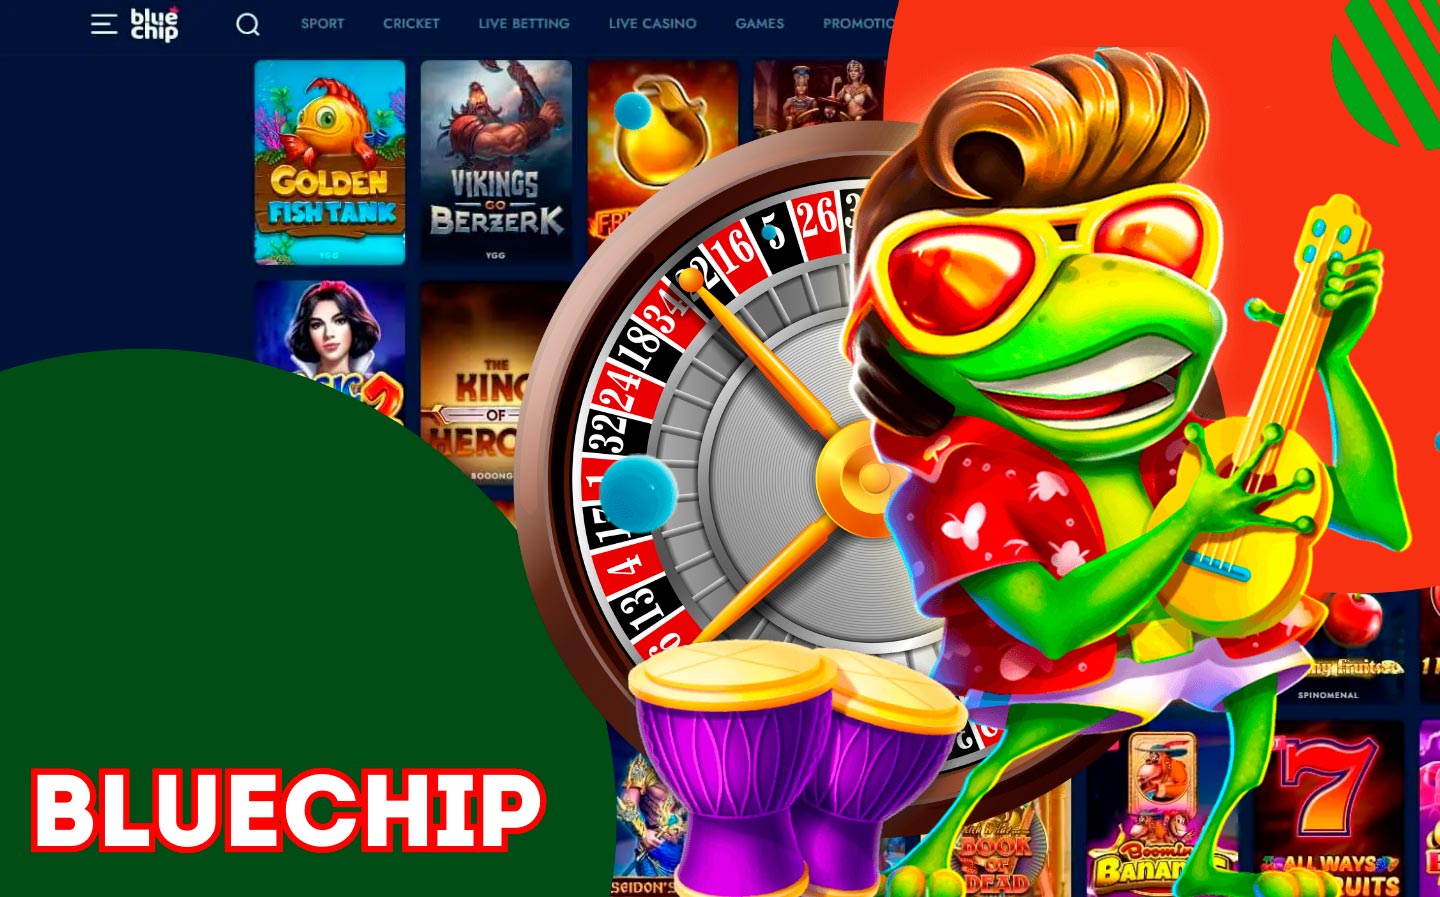 Bluechip Casino is a popular casino